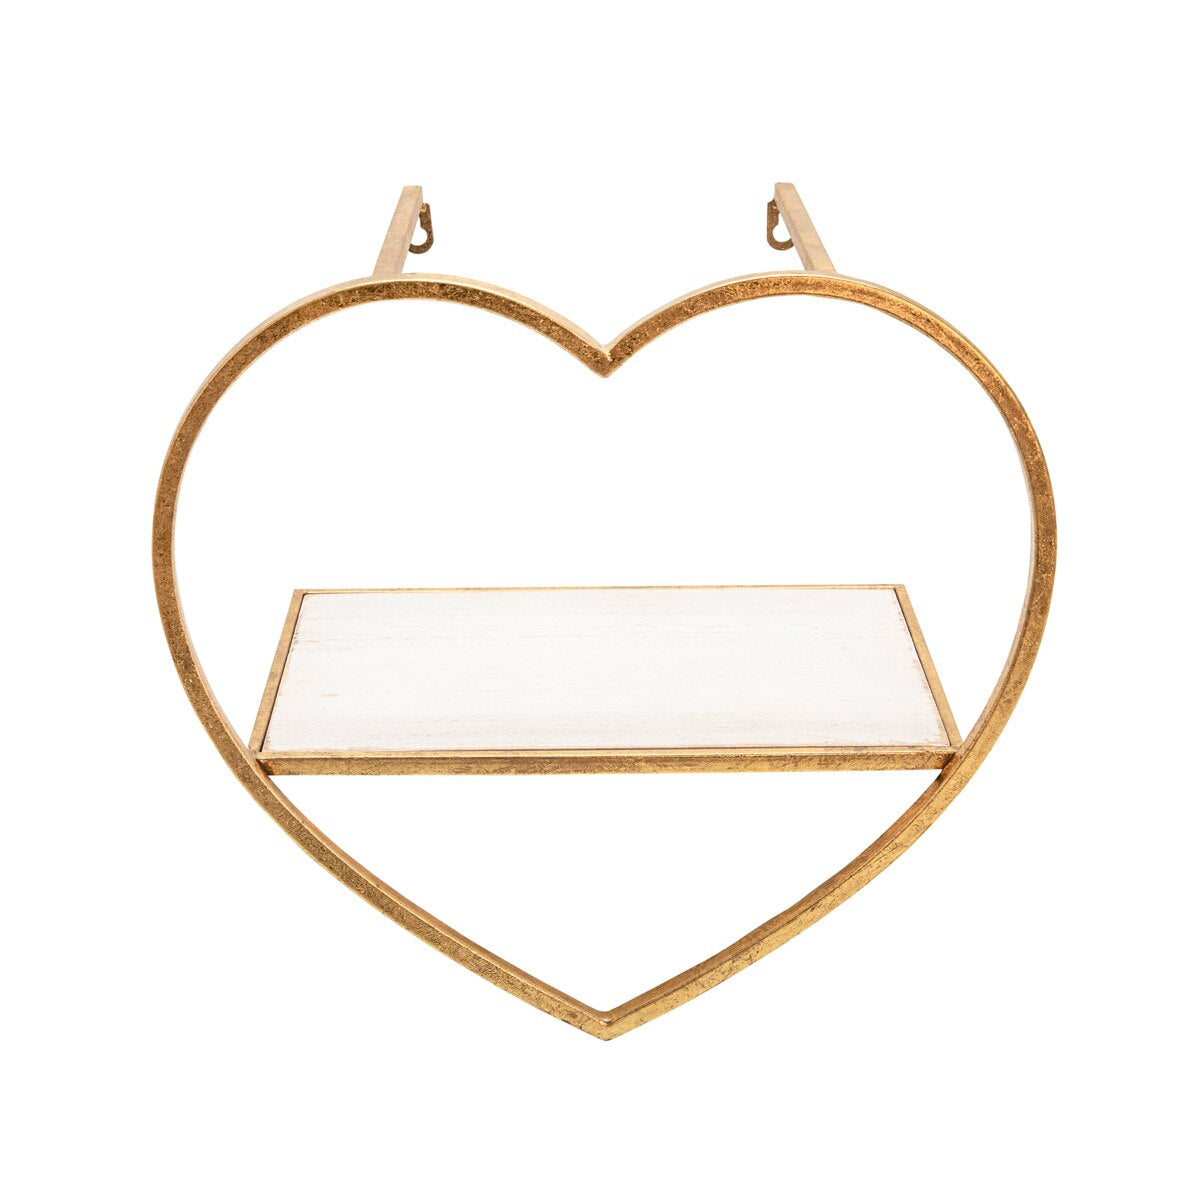 S/3 Metal/wood Heart Wall Shelves, Gold